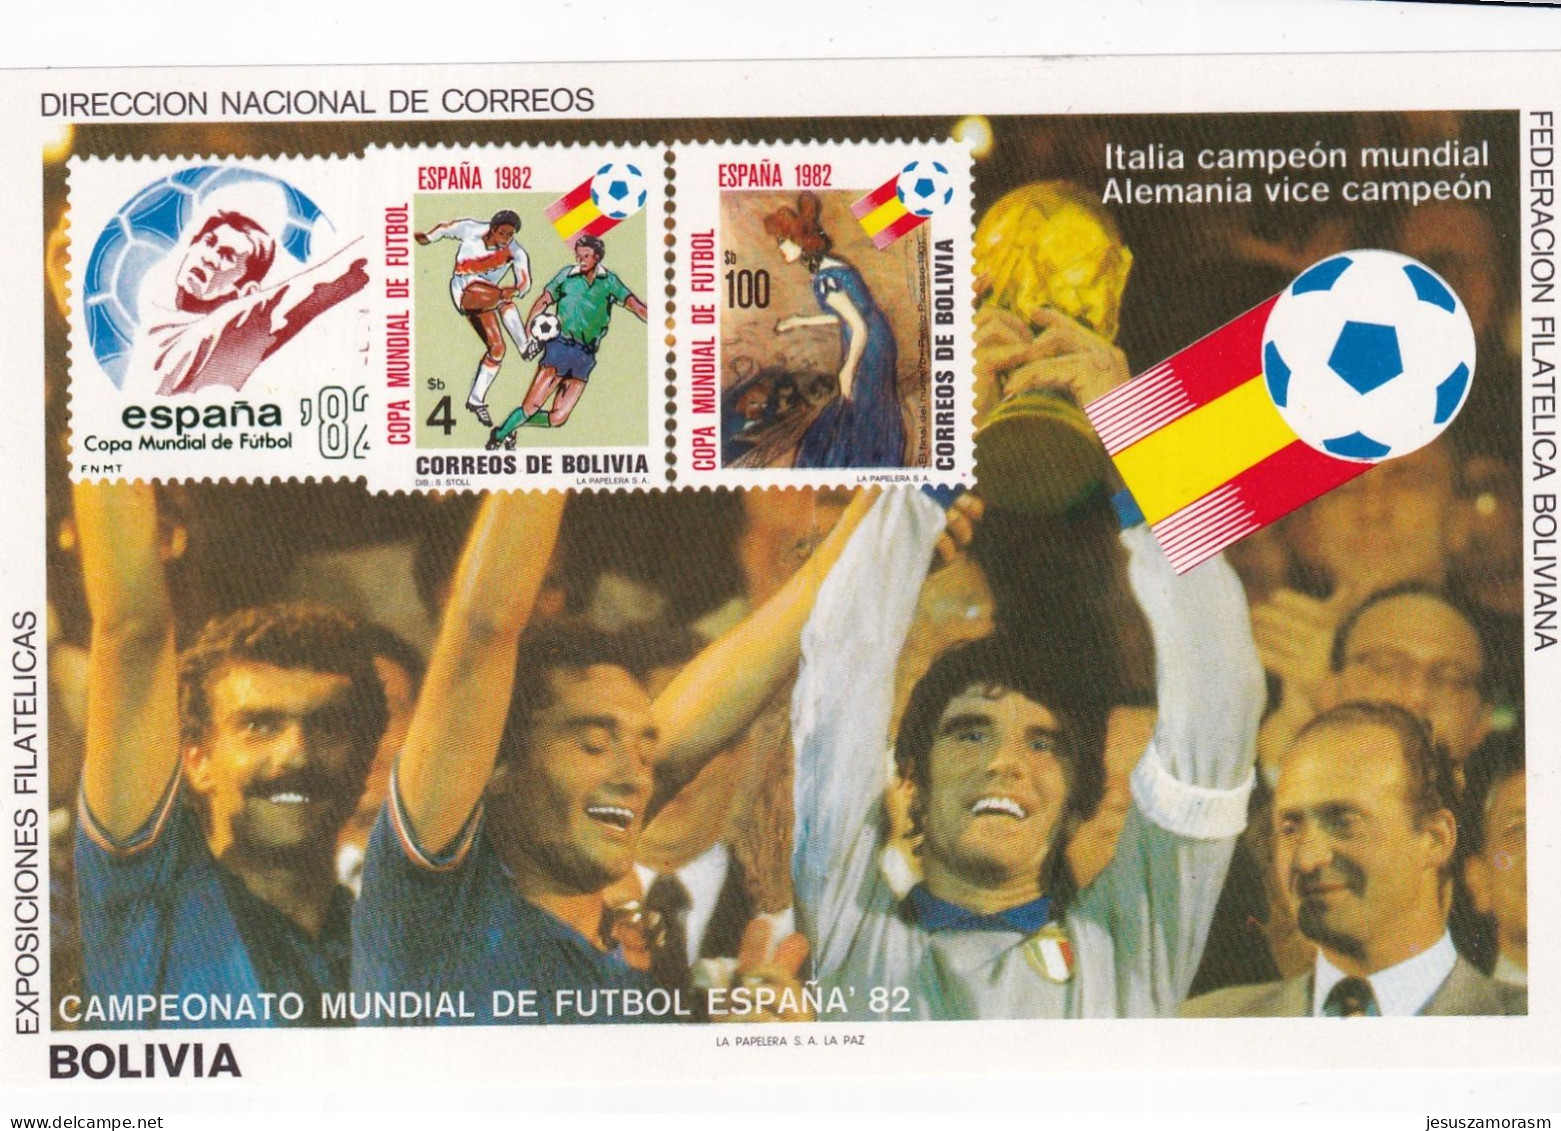 Bolivia Hb Michel 128 - 1982 – Spain